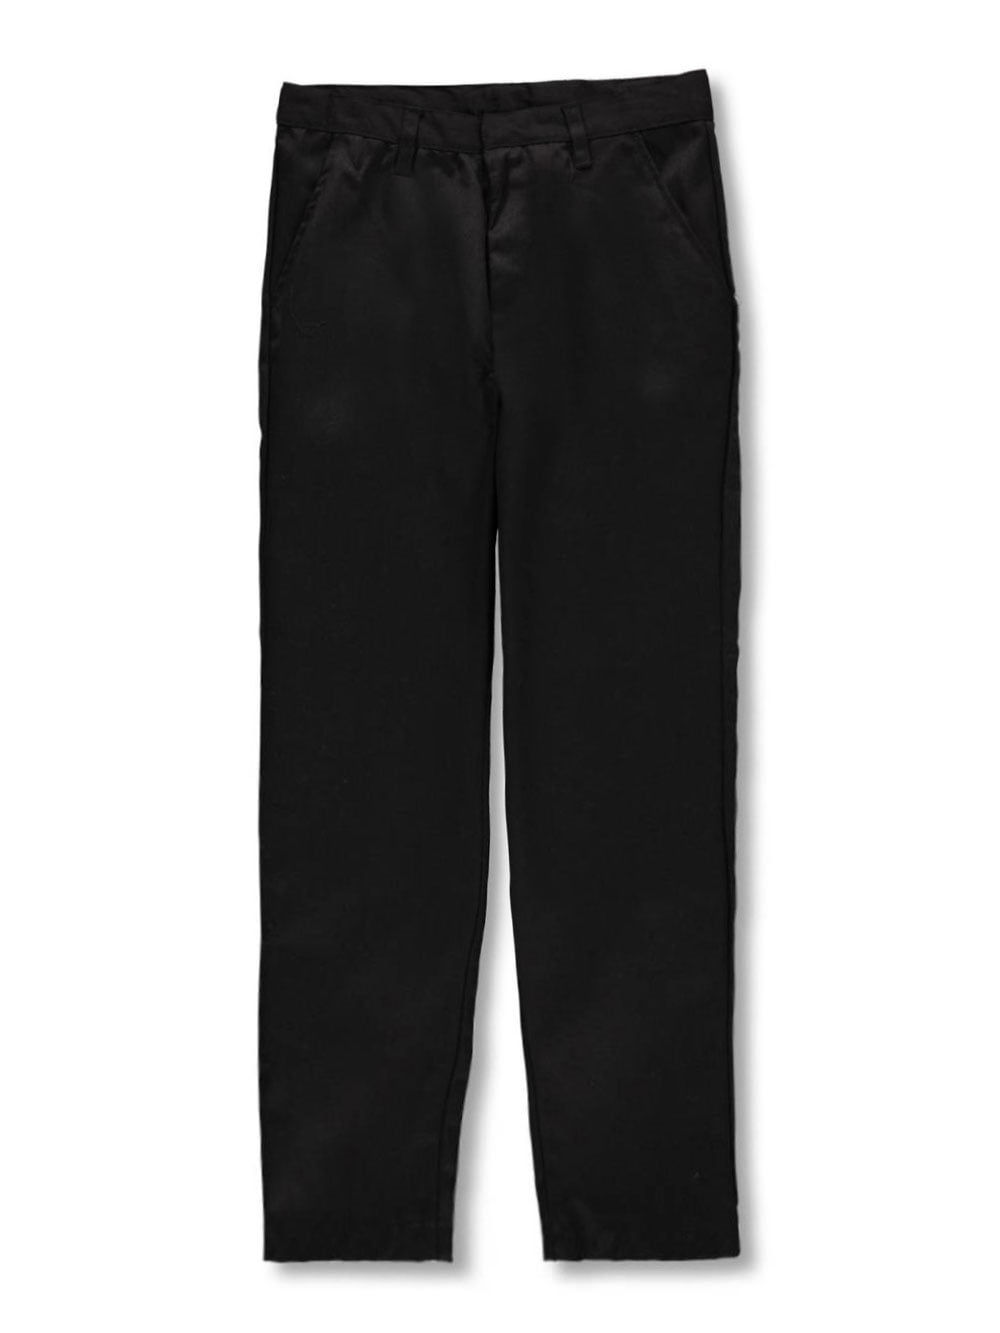 Galaxy Boys School Uniform Flat Front Pants (Big Boys) - Walmart.com